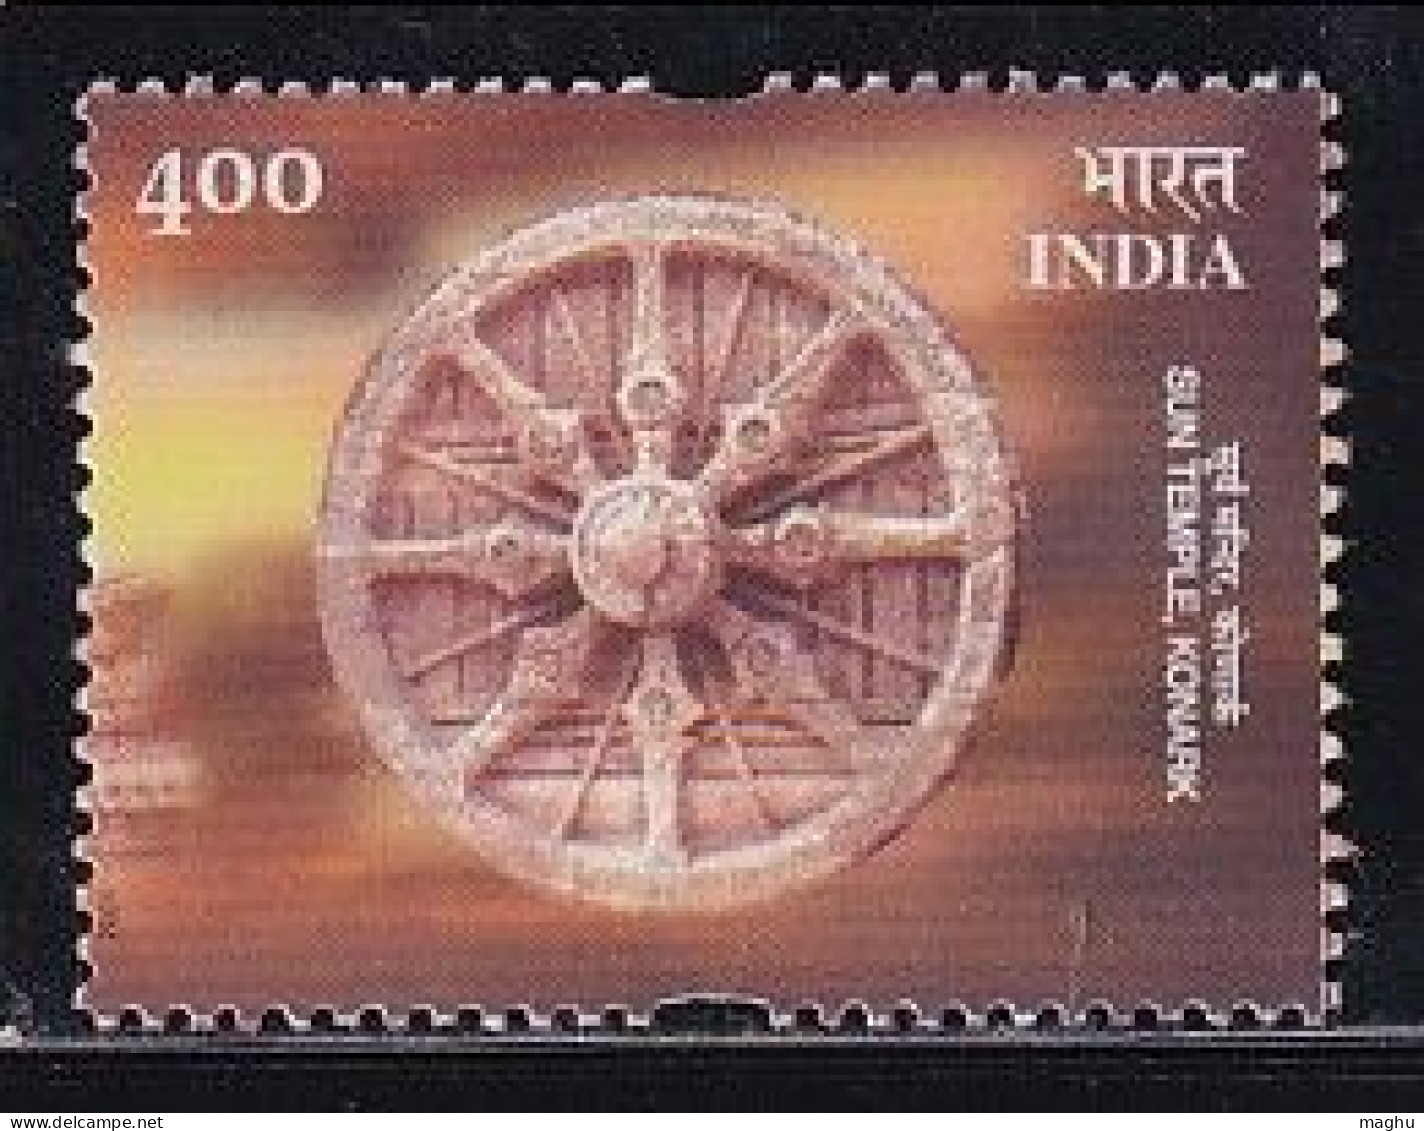 1v Astronomy Wheel, India MNH 2001, Konark Sun Temple, (Black Pagoda), UNESCO Heritage Architecture - Unused Stamps